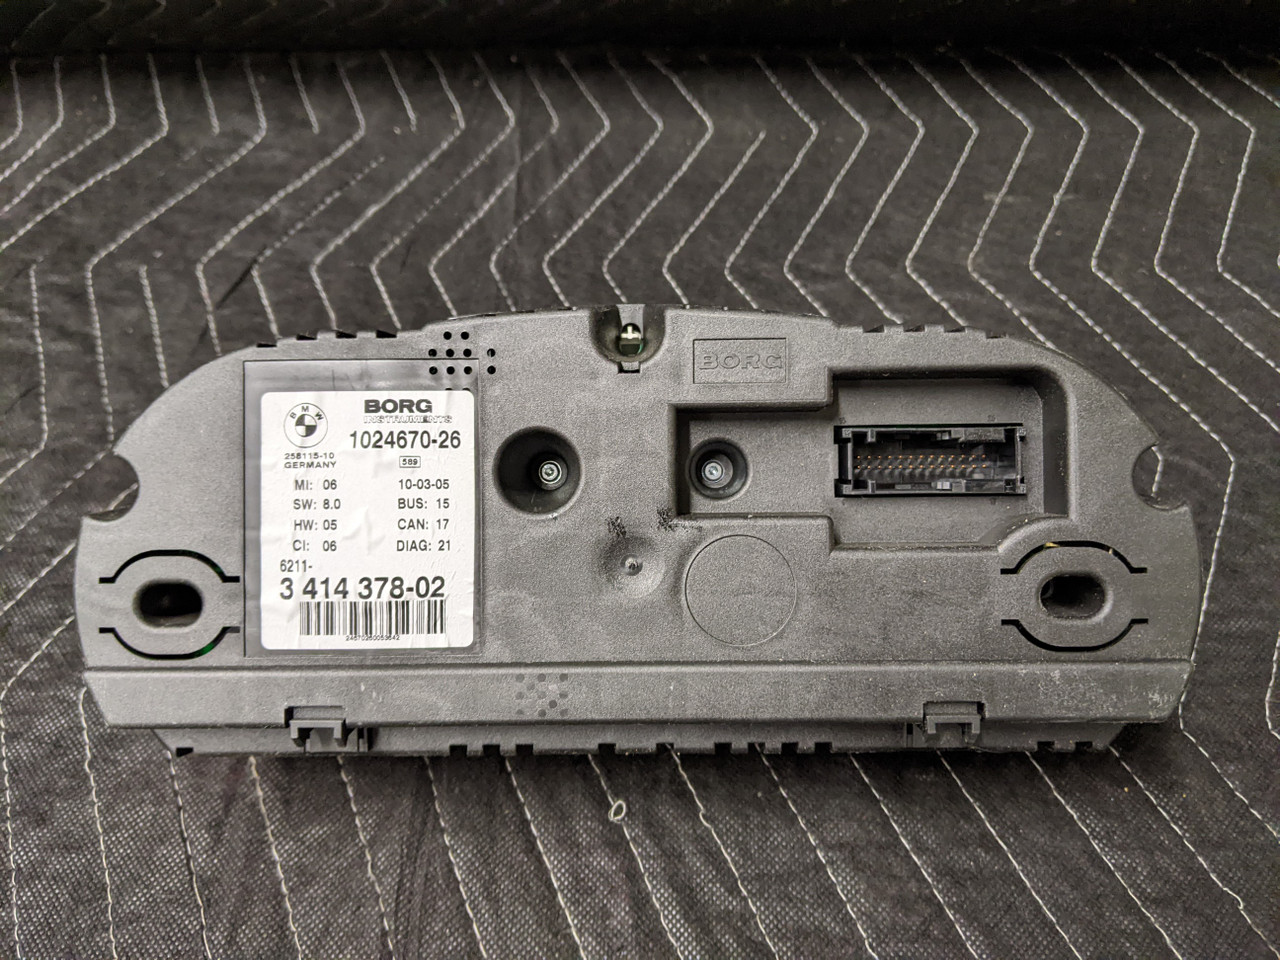 BMW E83 X3 Instrument Cluster Speedometer Odometer 62113414378